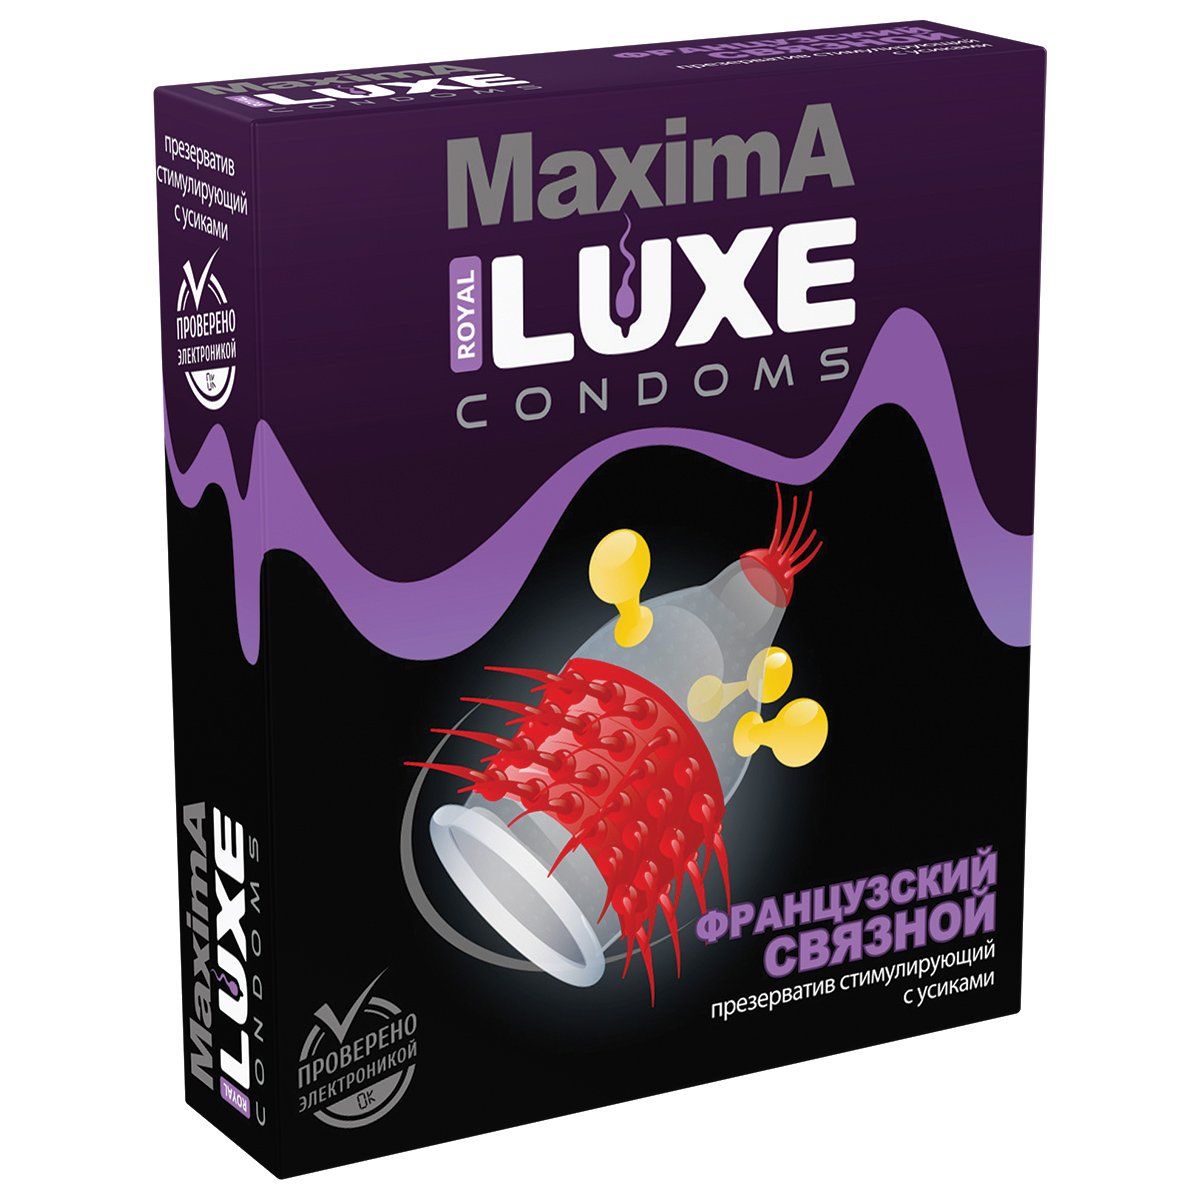 Презервативы Luxe Maxima Французский Связной, 1шт